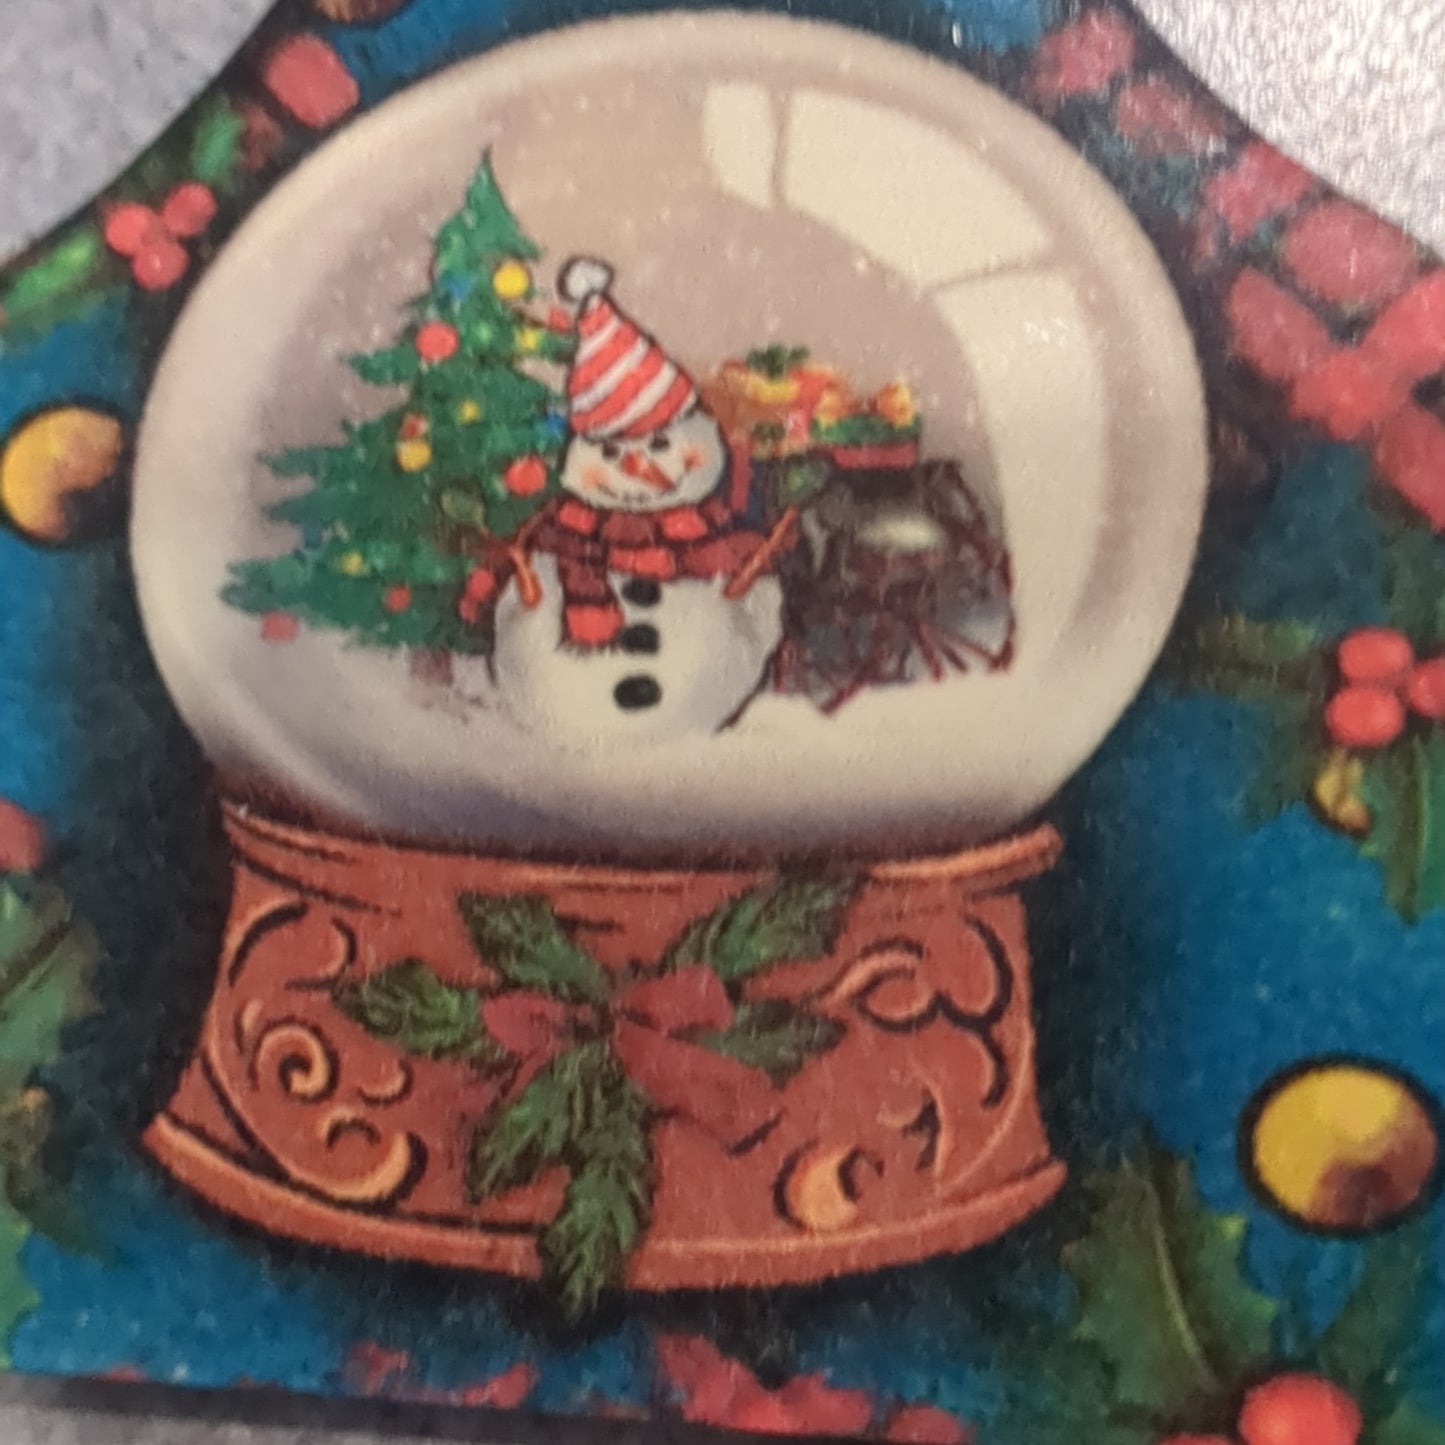 Keychain - ear tag snow globe with snowman inside